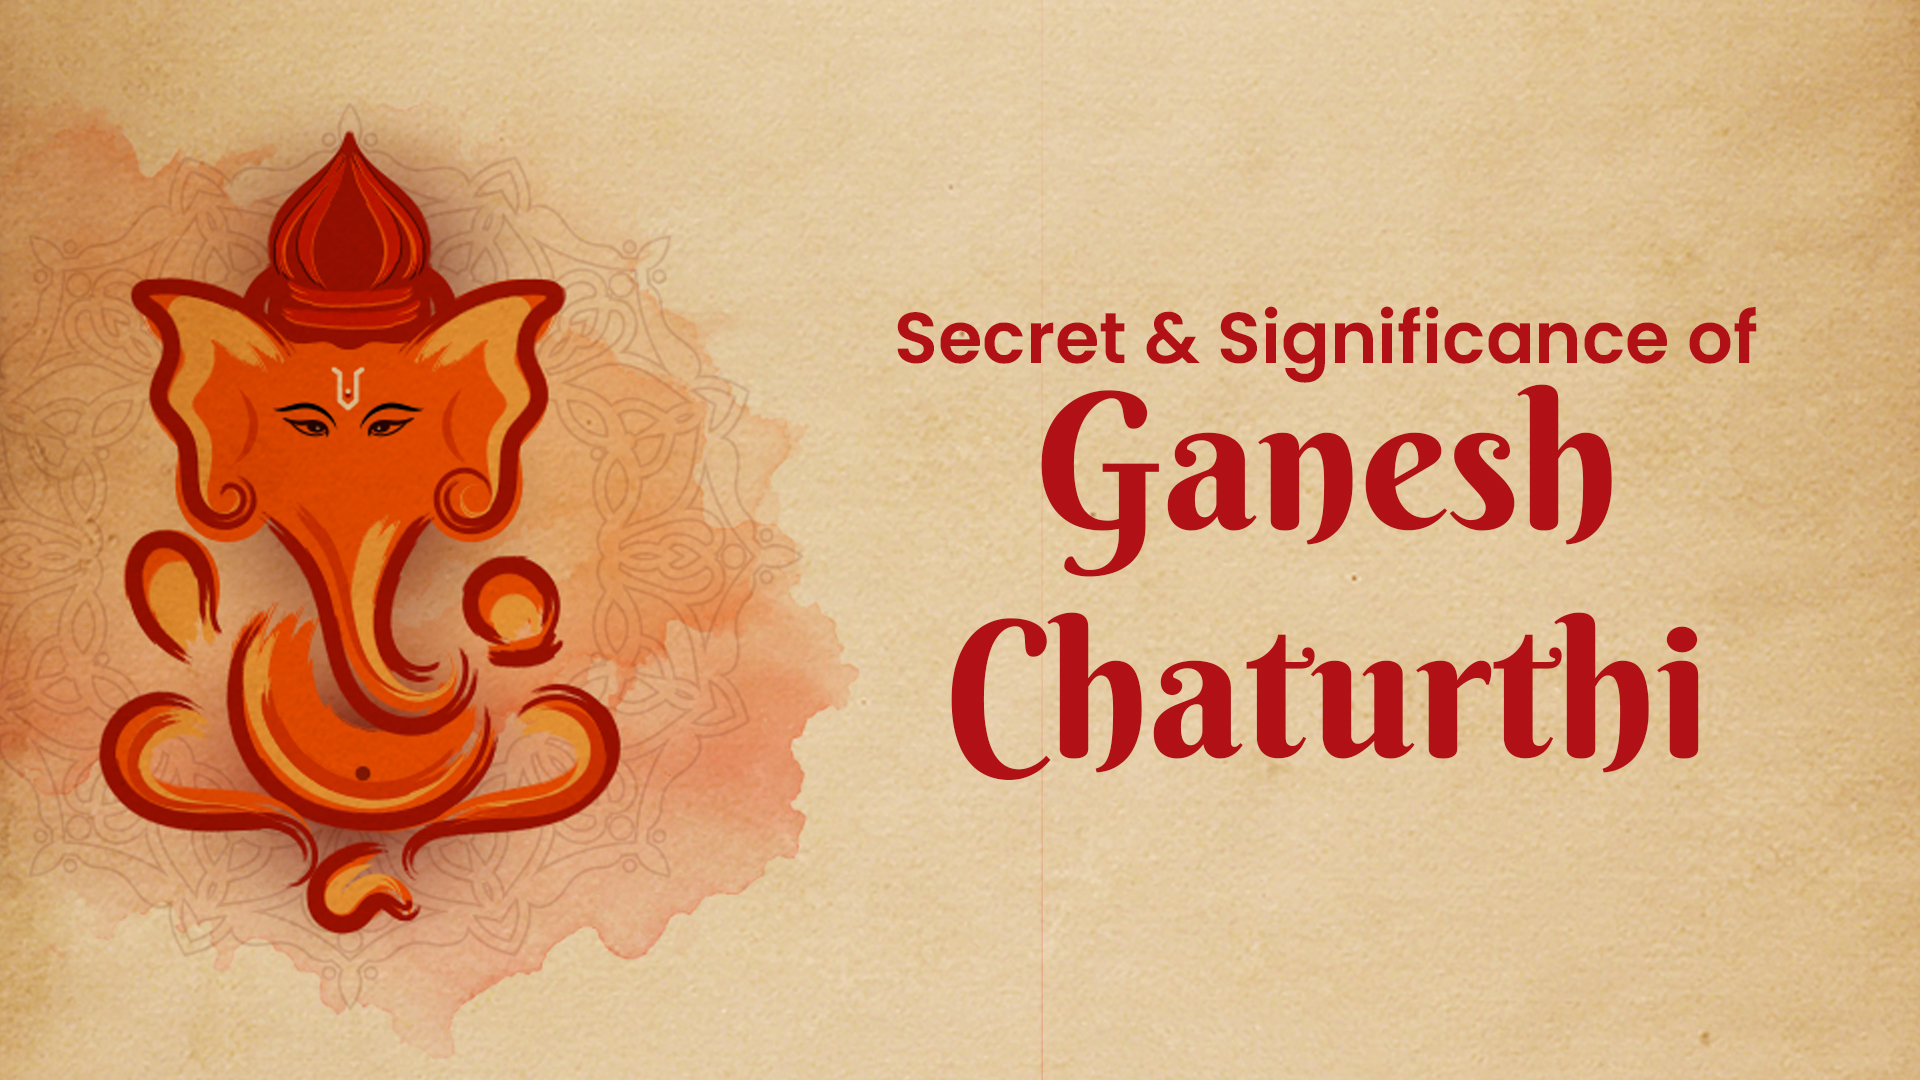 Secret & significance of Ganesh Chaturthi